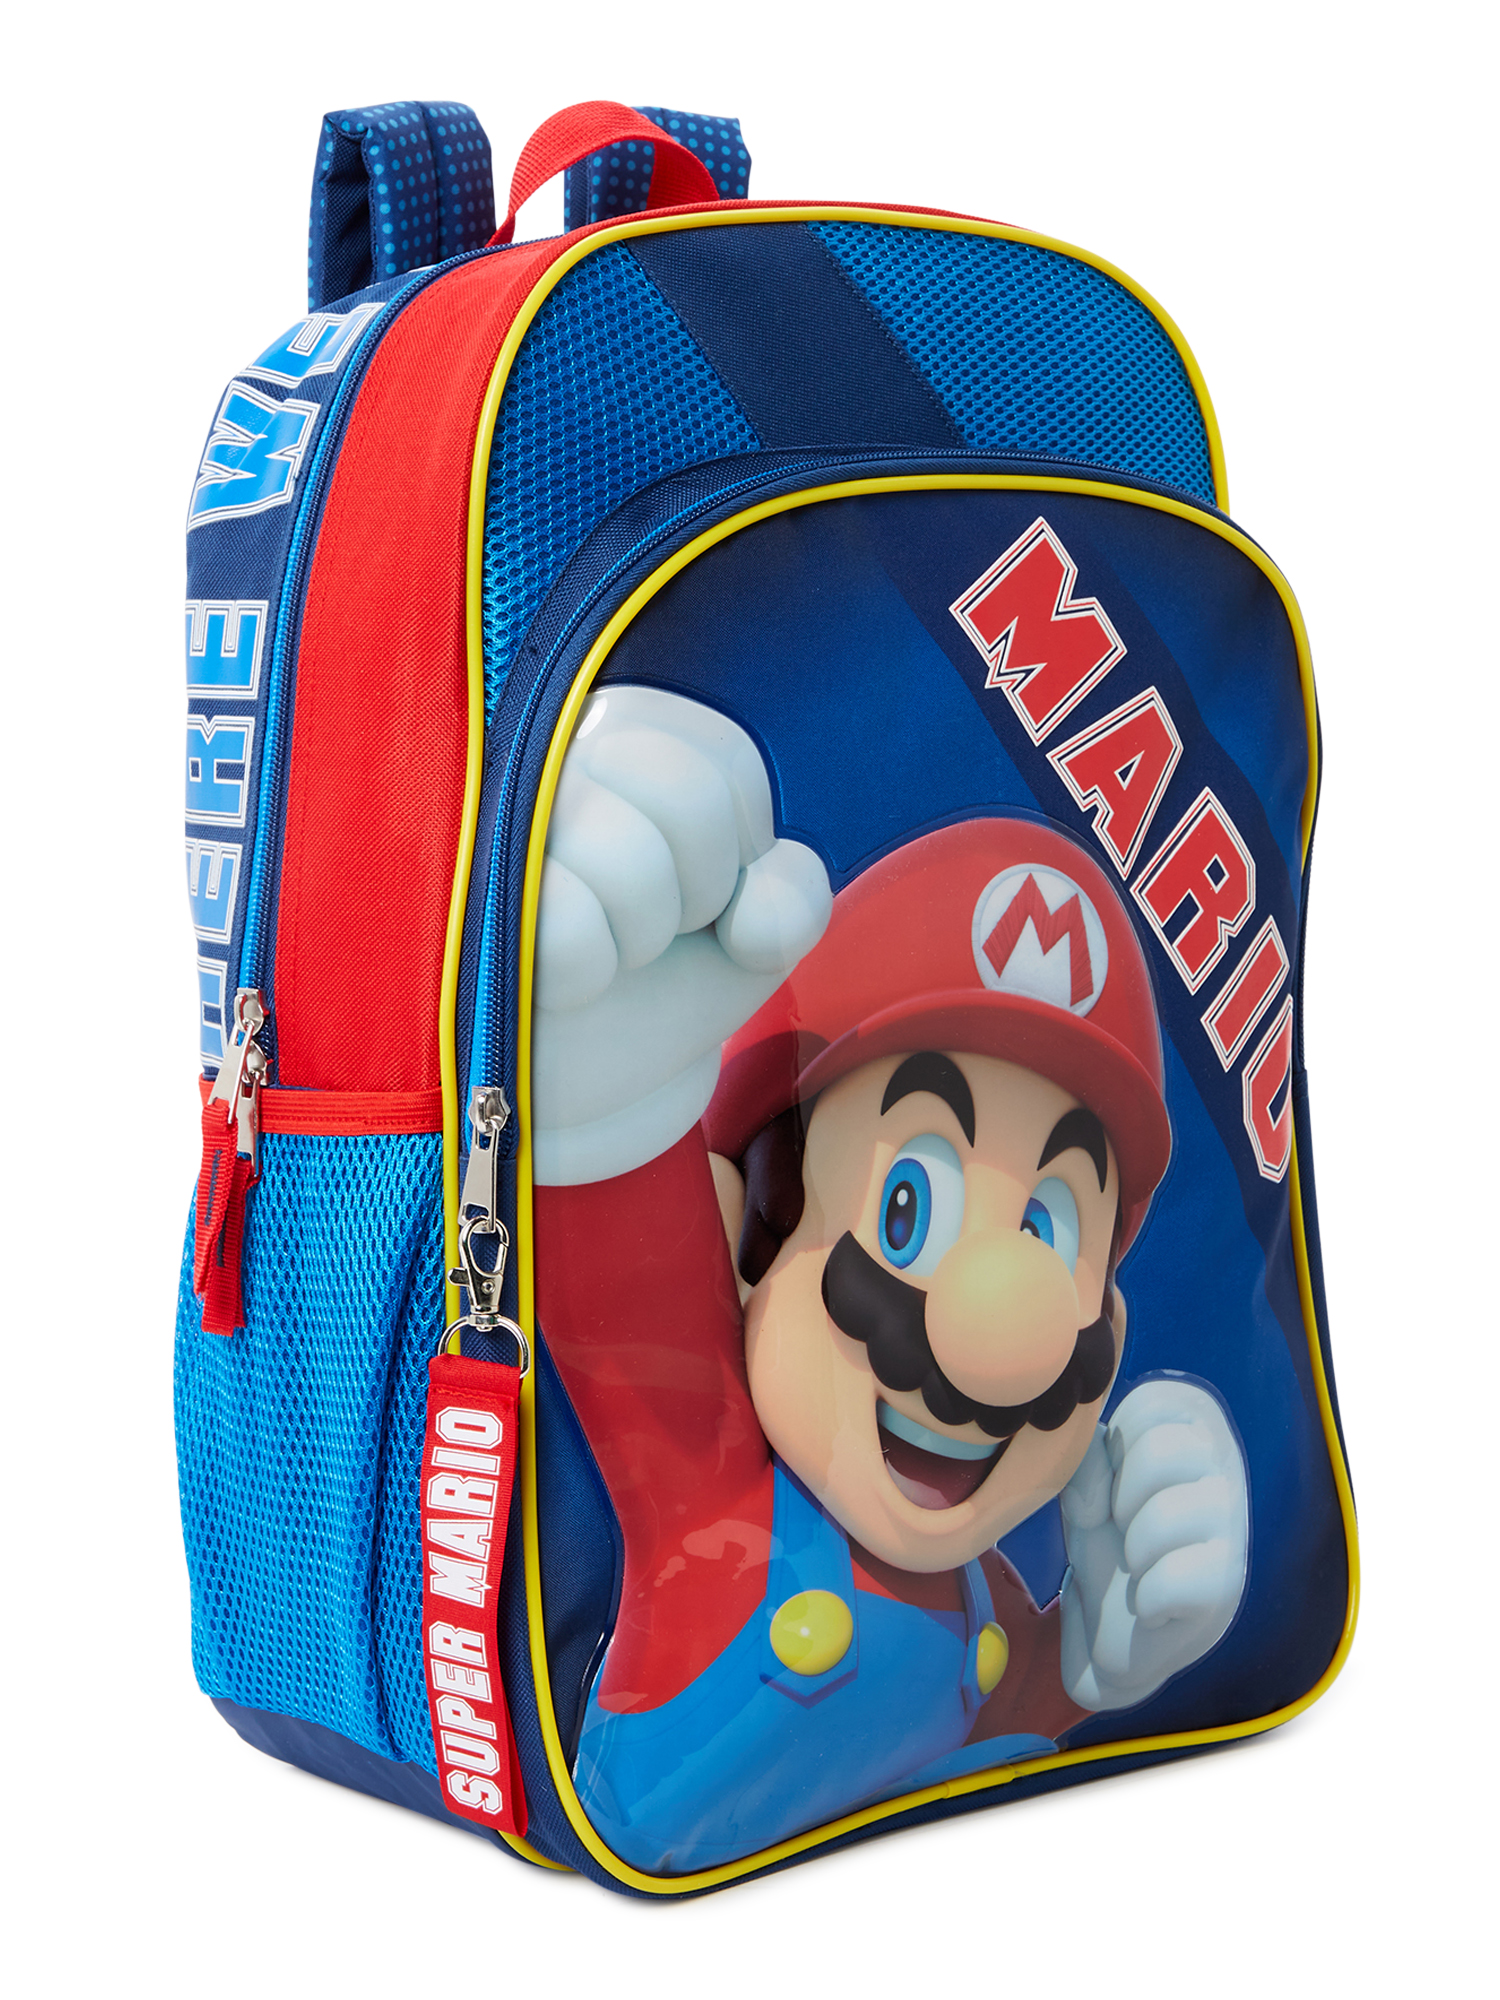 Nintendo Super Mario Bros. Kids’ Backpack Blue Red - image 3 of 5